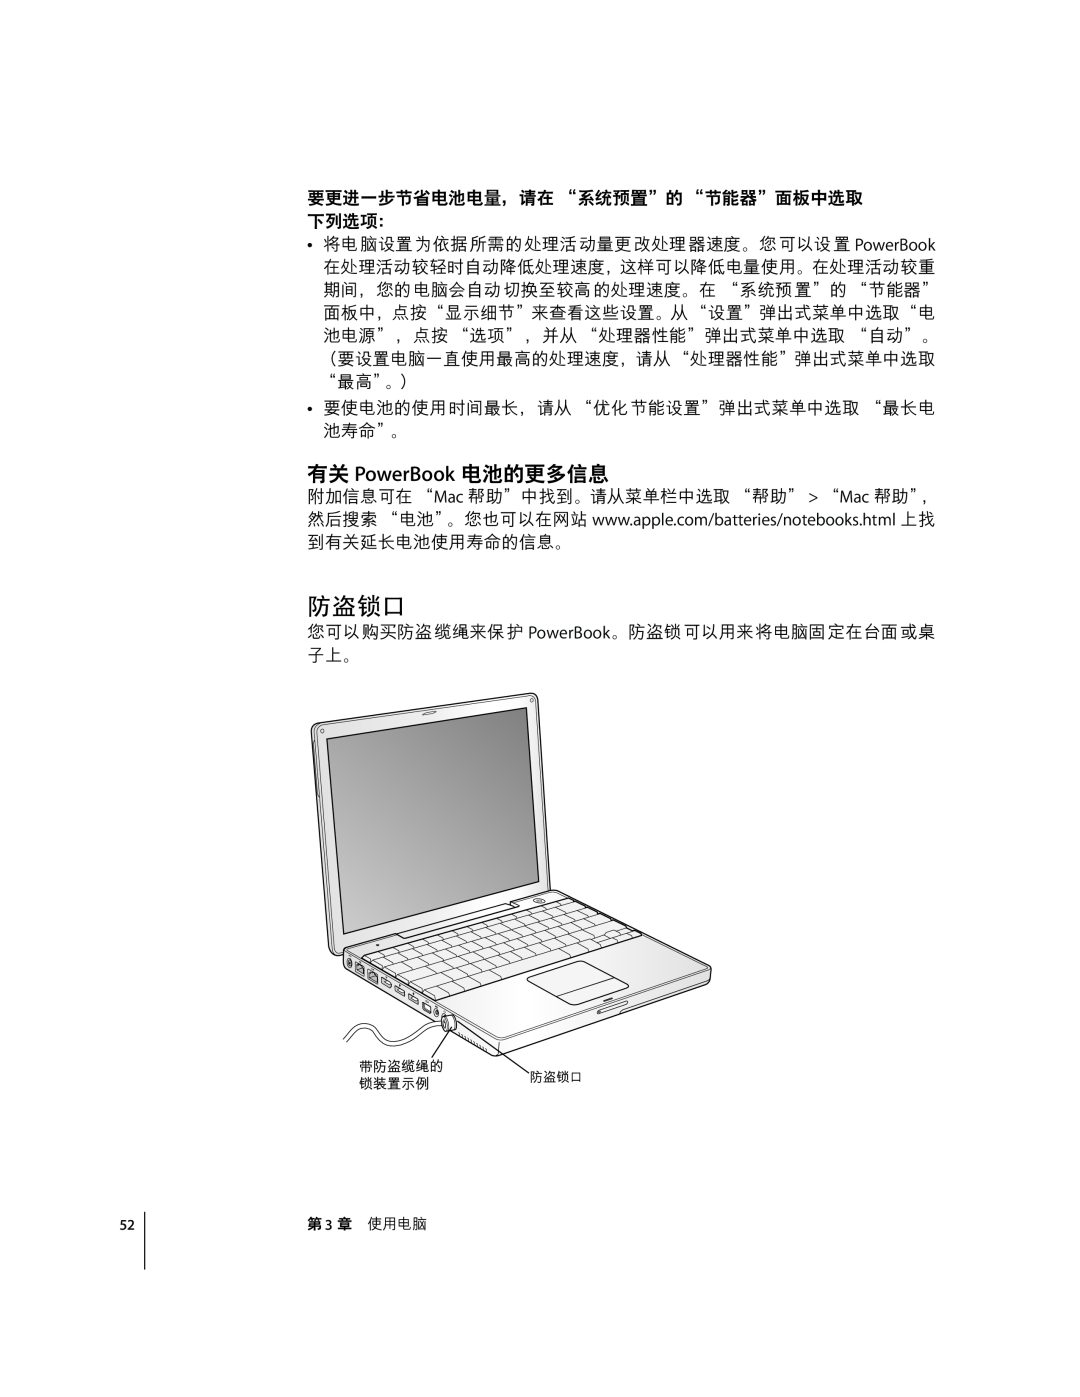 Apple G4 12 manual ²³´µ, ef PowerBook ×-g÷%, 4gÏ‘×?jk o !zp- oTRp#a$ žŸ$6, 3 uÉ÷ 